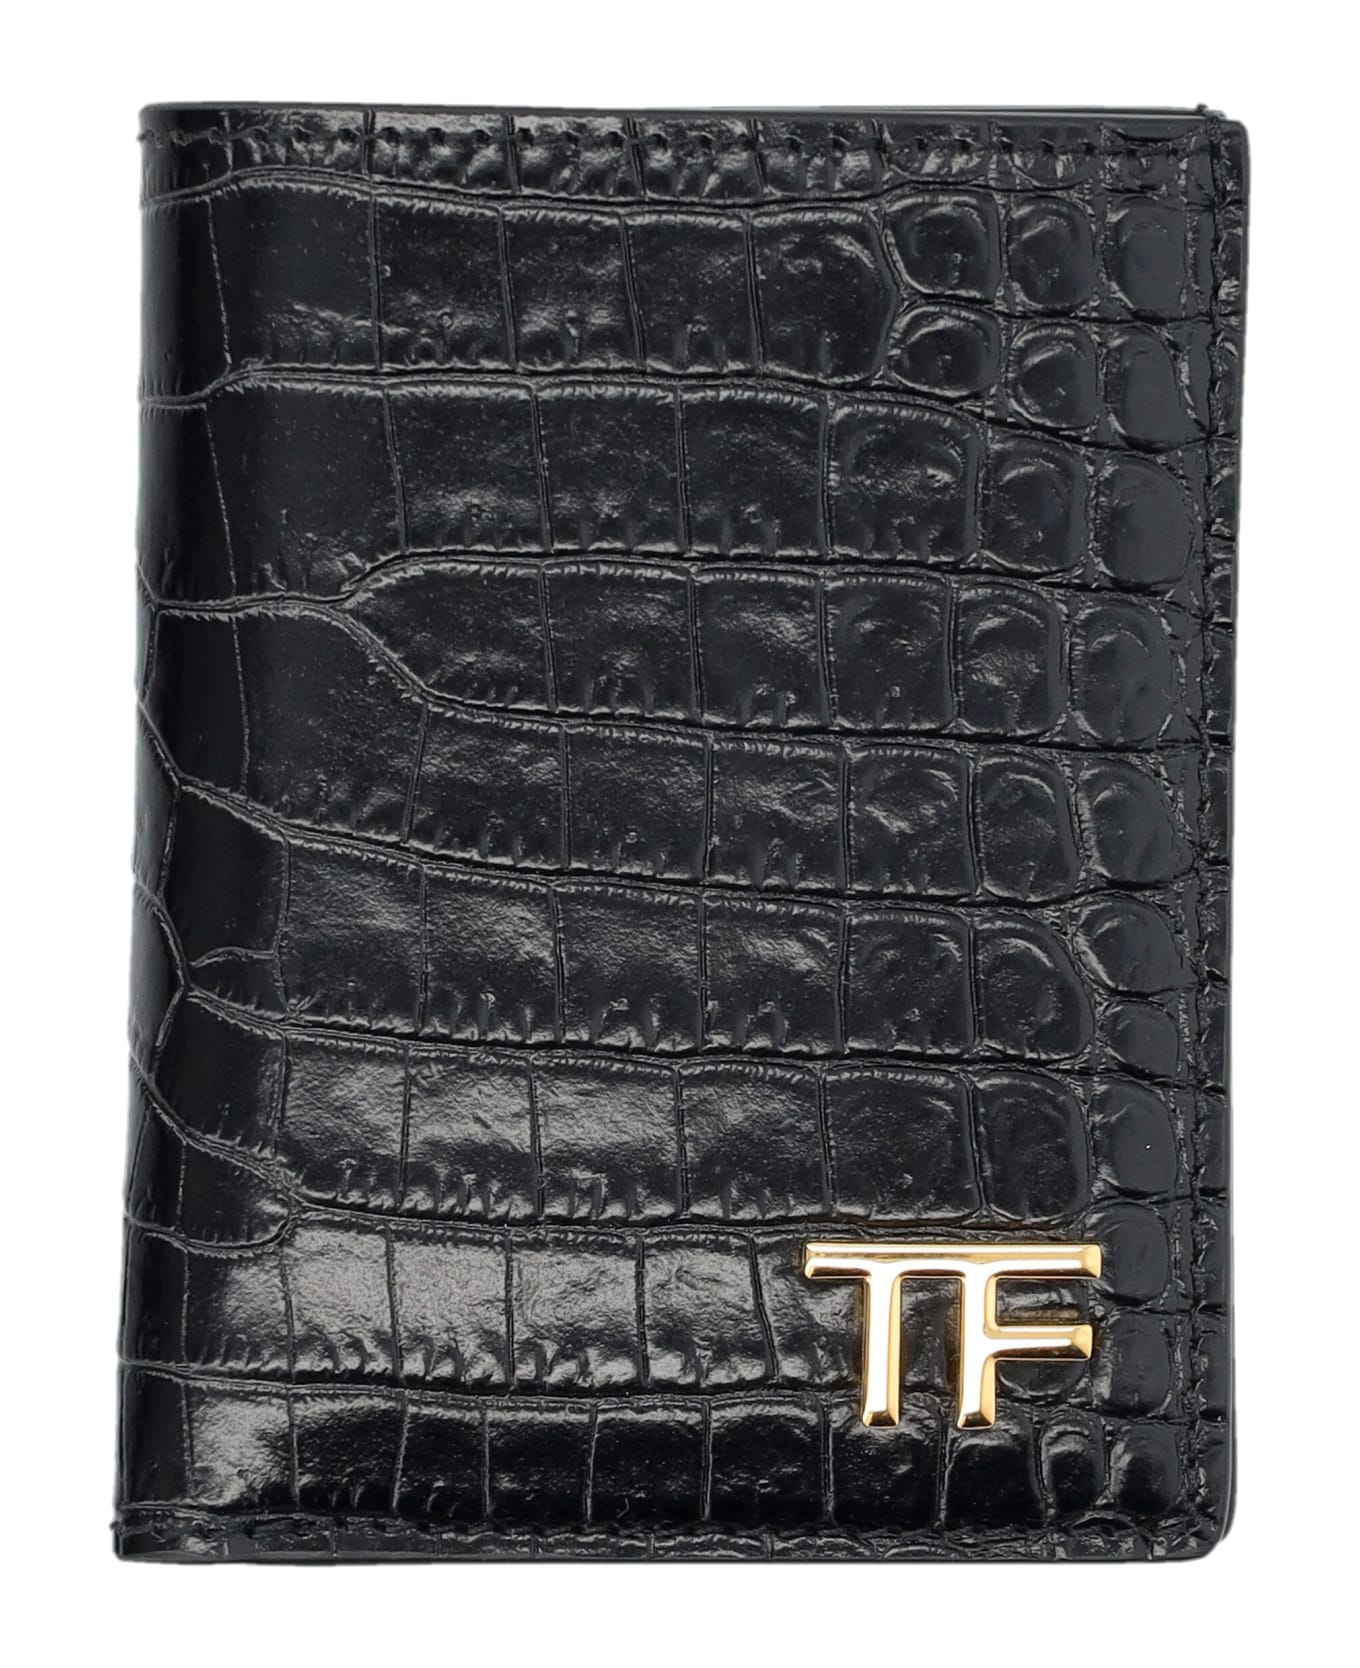 Tom Ford Printed Croc Folding Wallet - BLACK